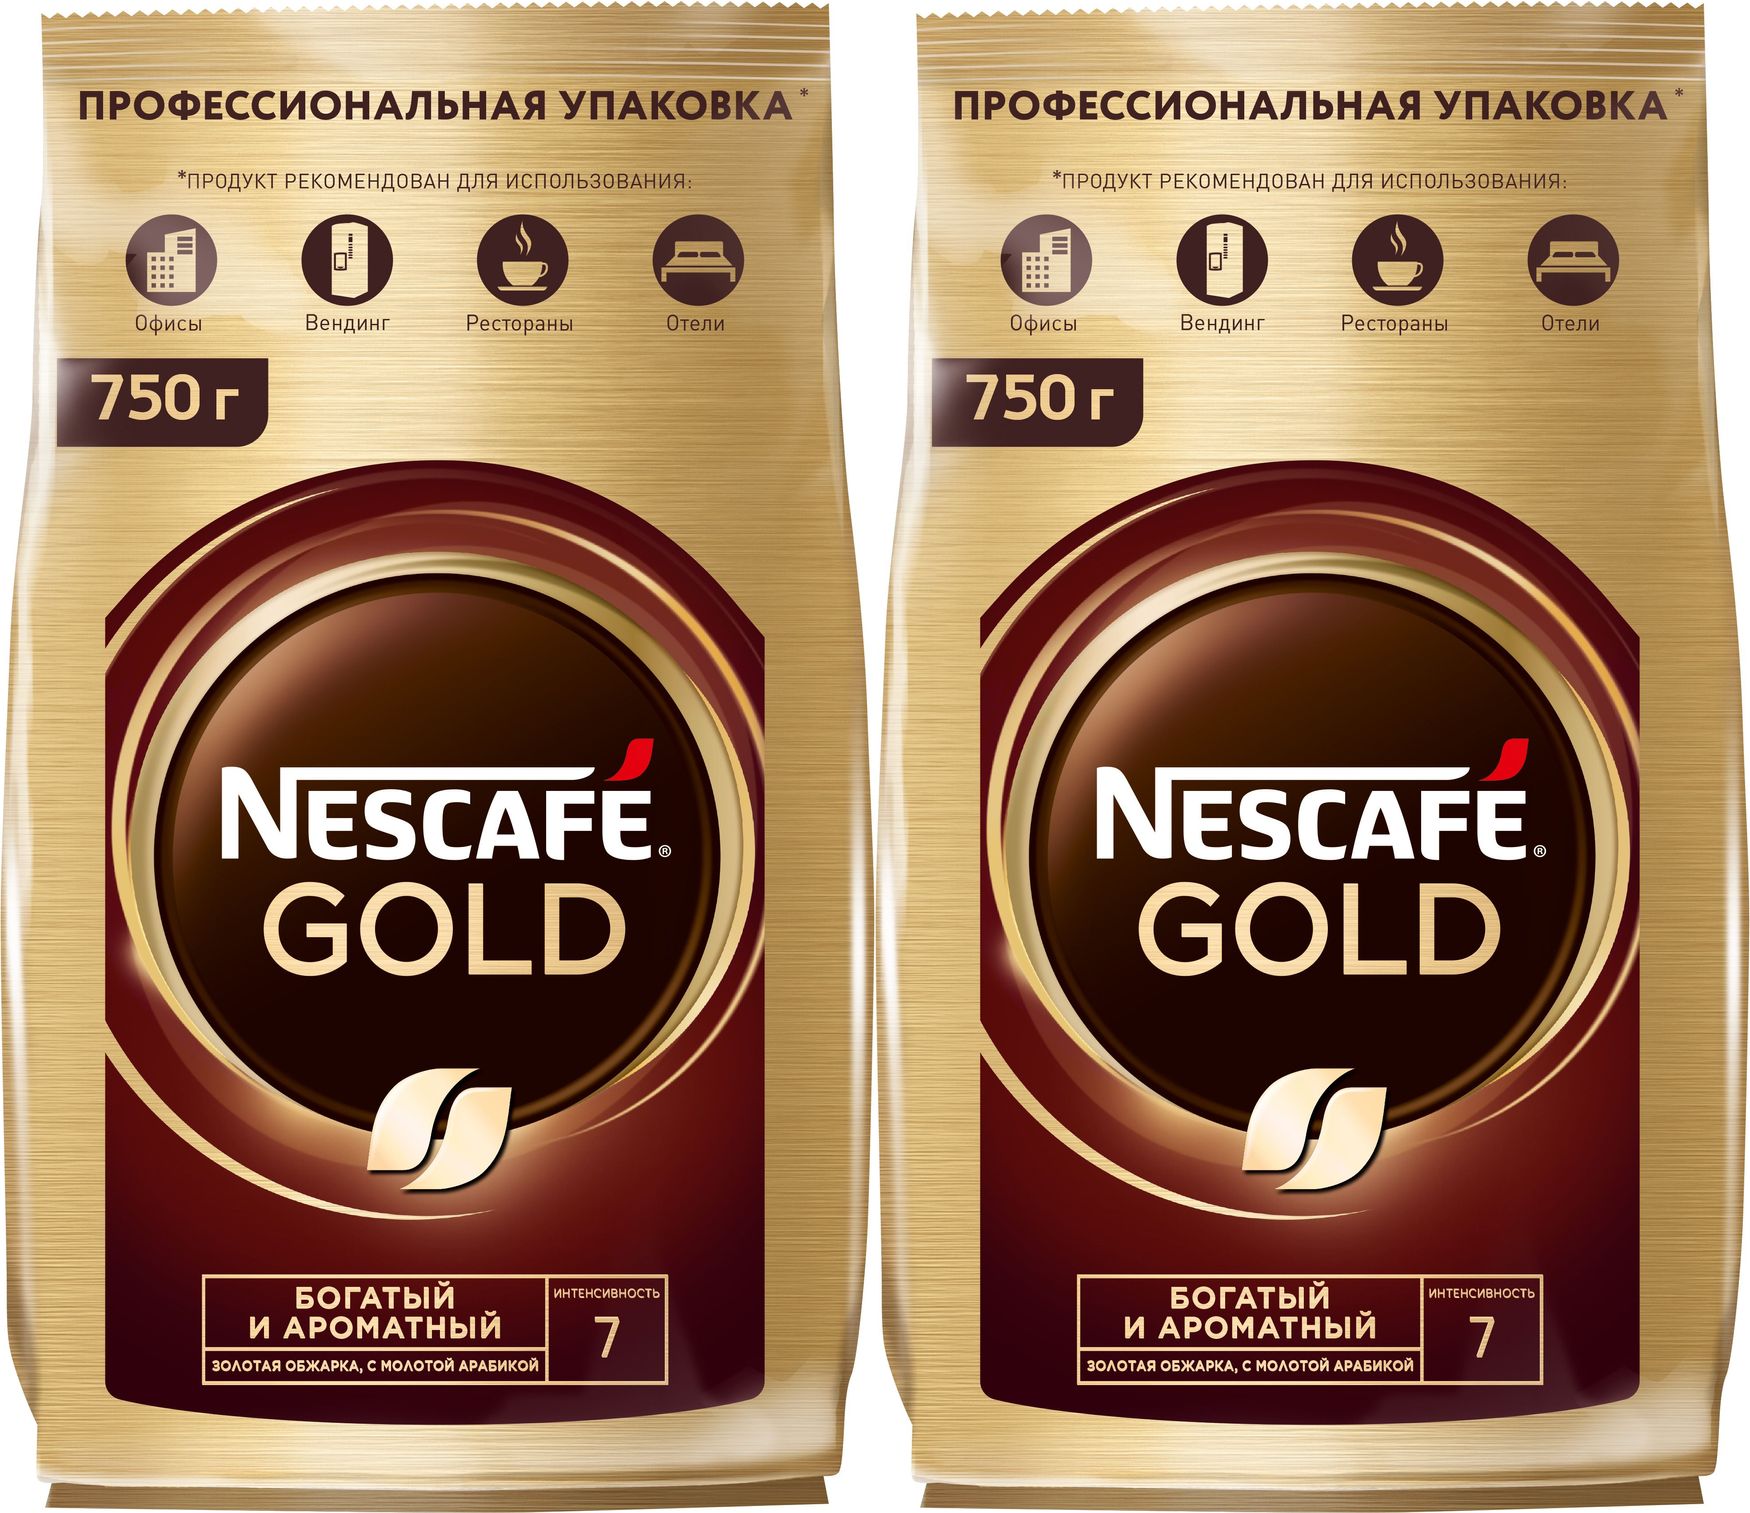 Nescafe gold пакет. Nescafe Gold Aroma intenso. Nescafe Gold 290гр. Nescafe Gold Aroma intenso 85г. Нескафе Голд с добавлением молотого 2гр.